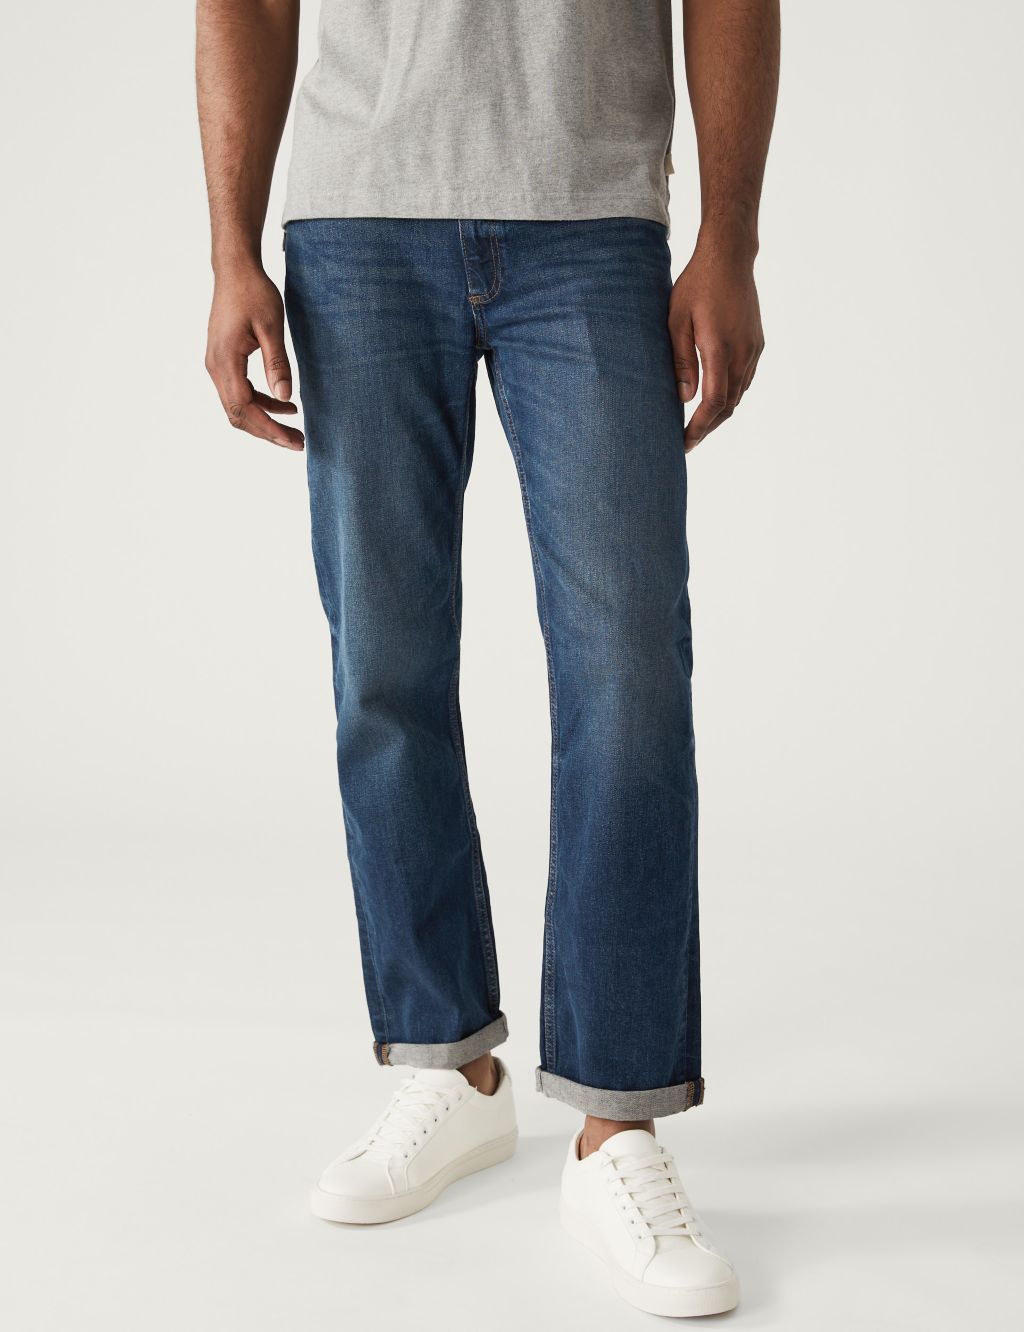 Straight Fit Belted Vintage Wash Jeans image 1